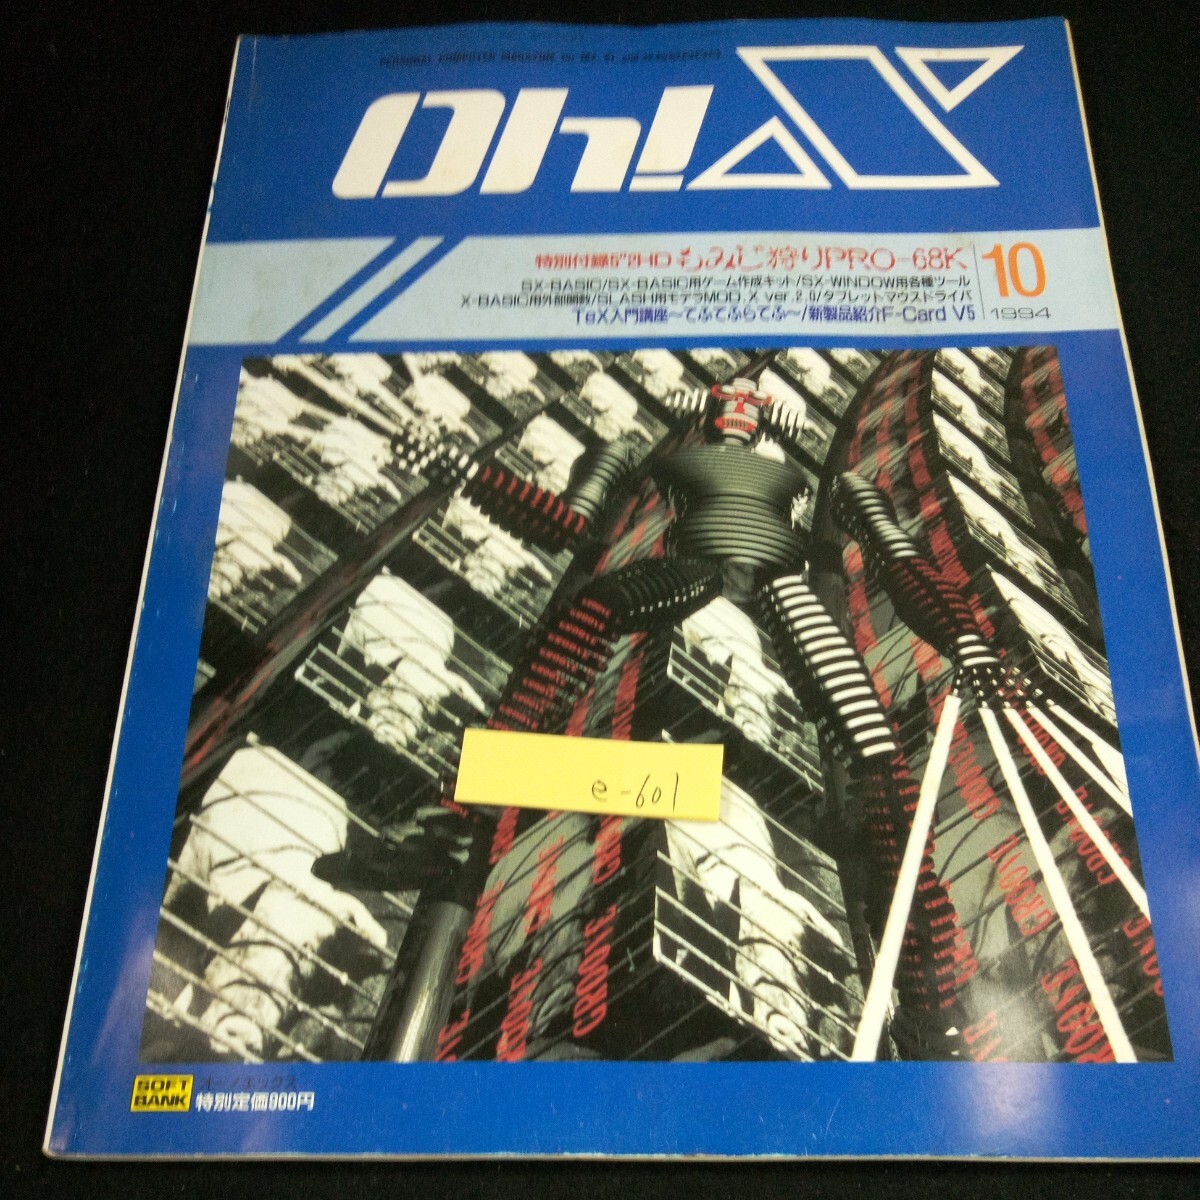 e-601 Oh!X オー!エックス 1994年発行 10月号 もみじ狩りPRO-68K SX-BASIC ゲーム作成キット TeX入門講座~てふてふらてふ~※4_傷、汚れあり